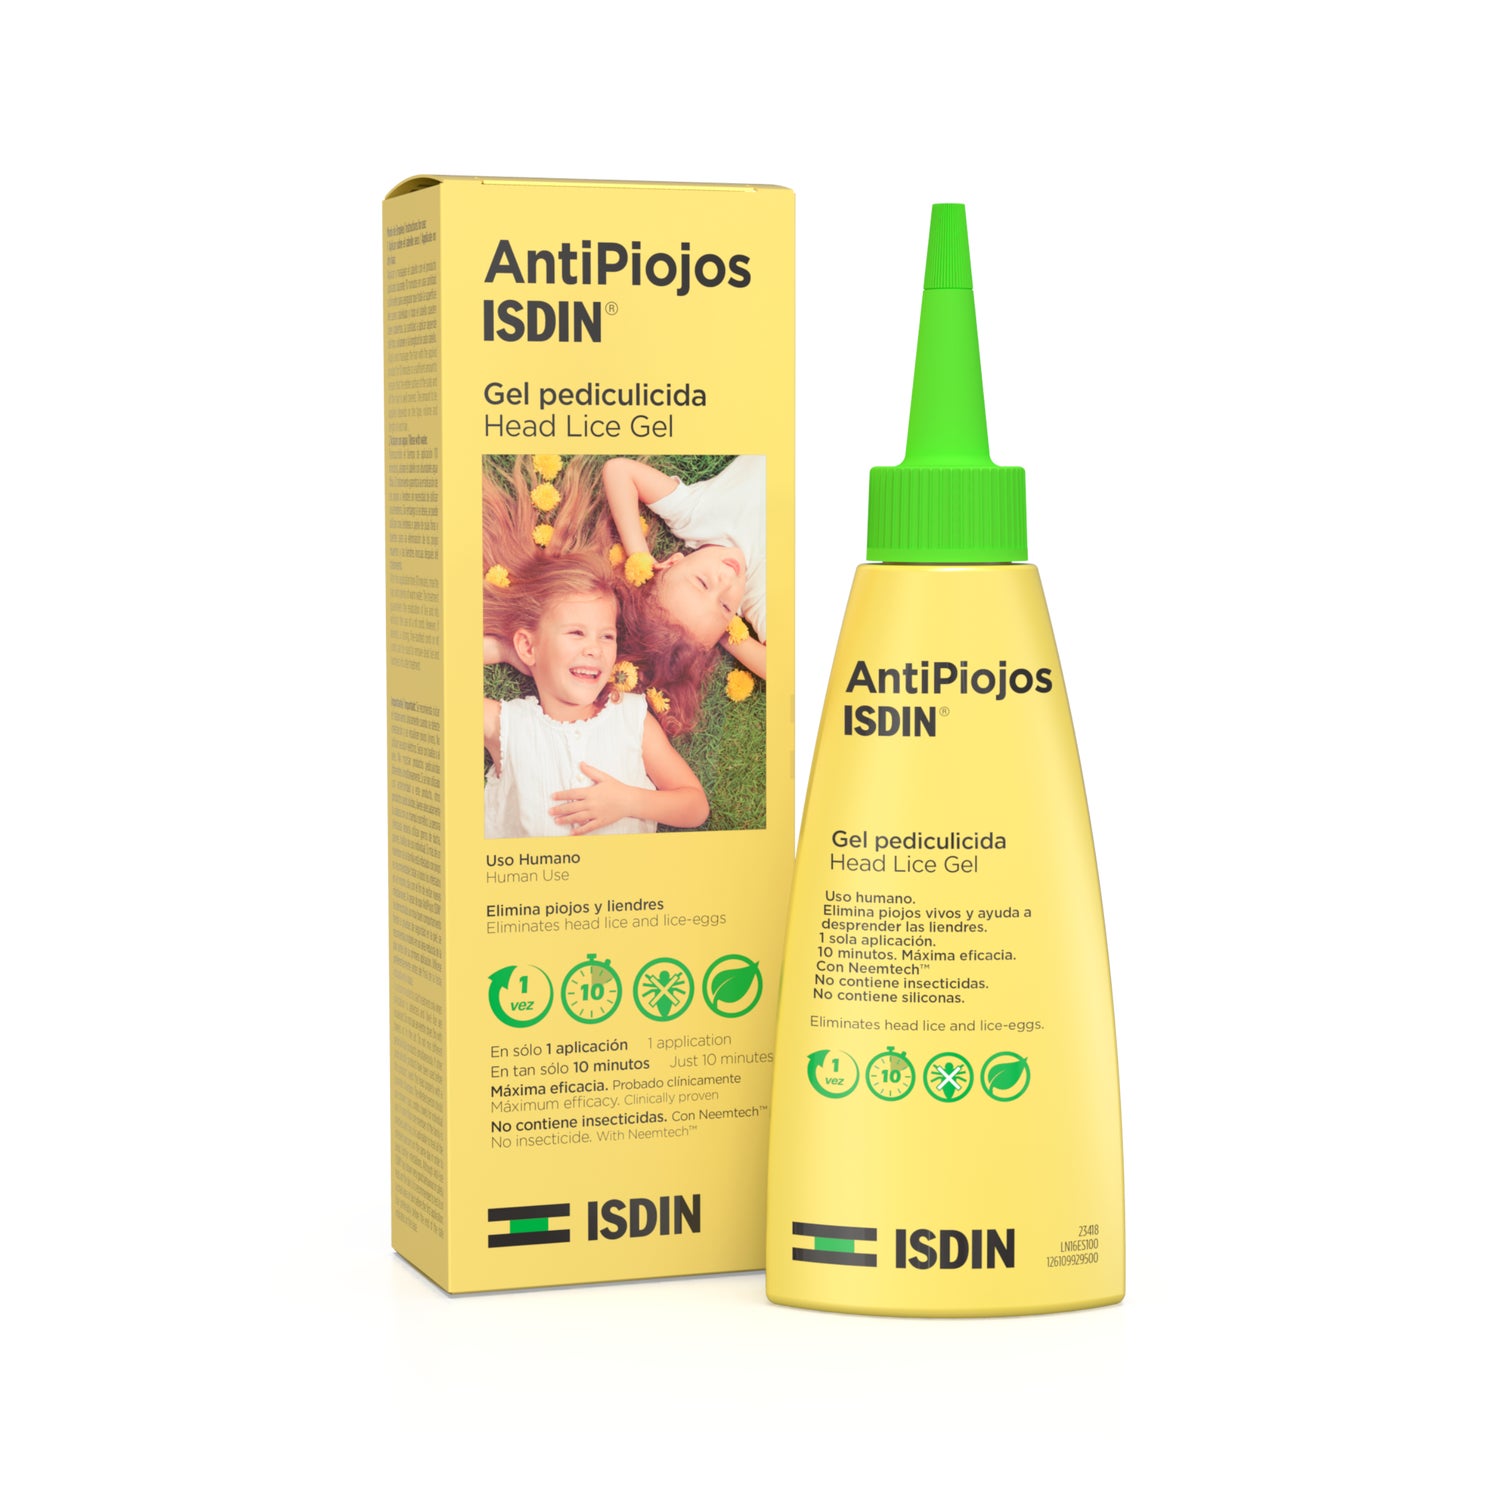 Neositrin Pack Champu (100ml) + Spray gel(60ml) para eliminar piojos y  liendres en 1 minuto